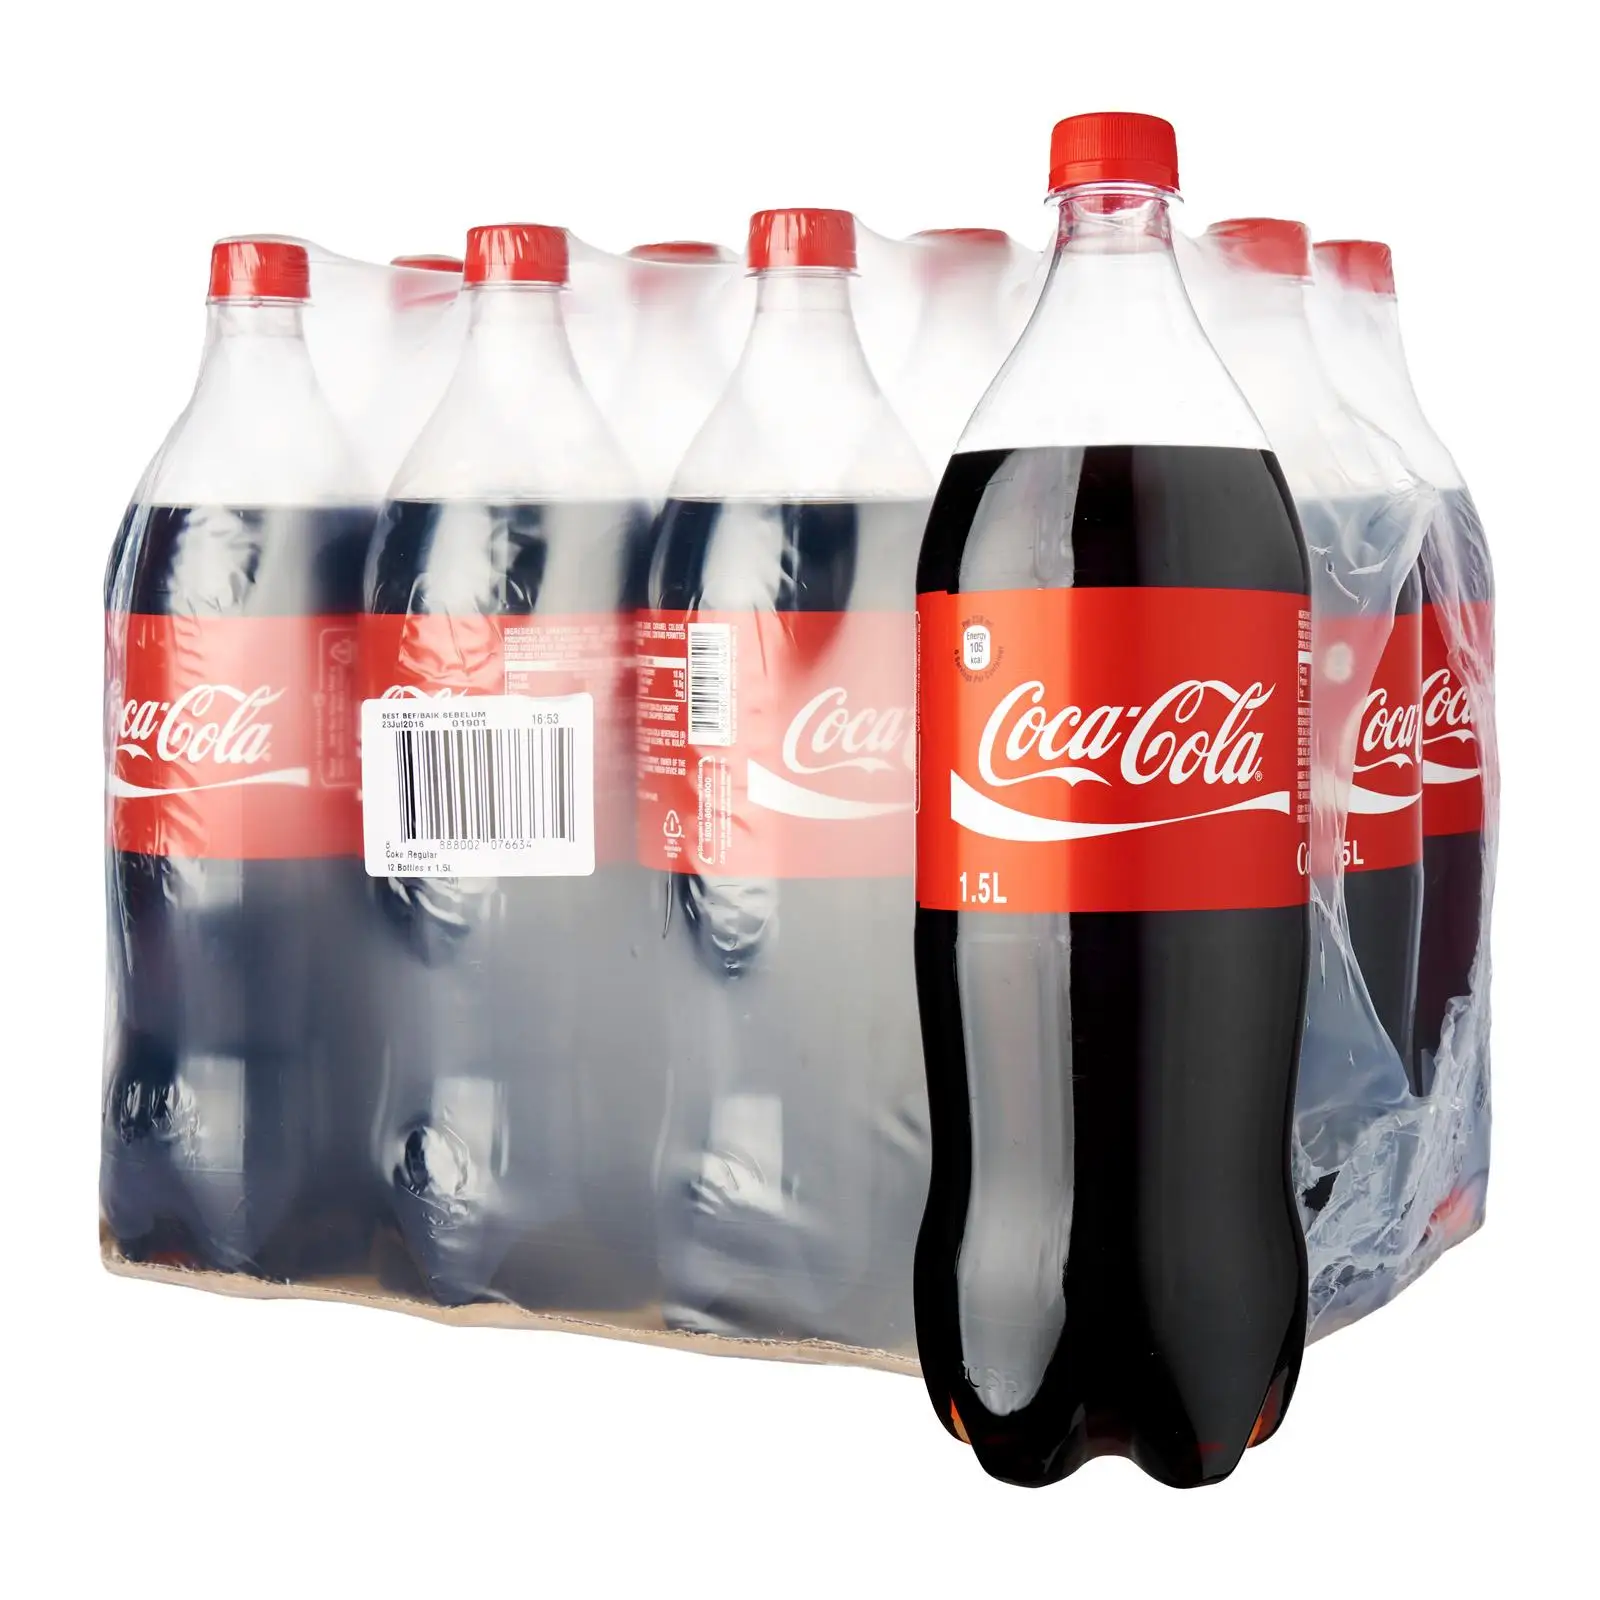 Кола сколько в упаковке. Coca Cola 1.5 l. Упаковка Кока кола 0.9л. Coca-Cola 1.5л. Напиток Coca-Cola 1.5л.